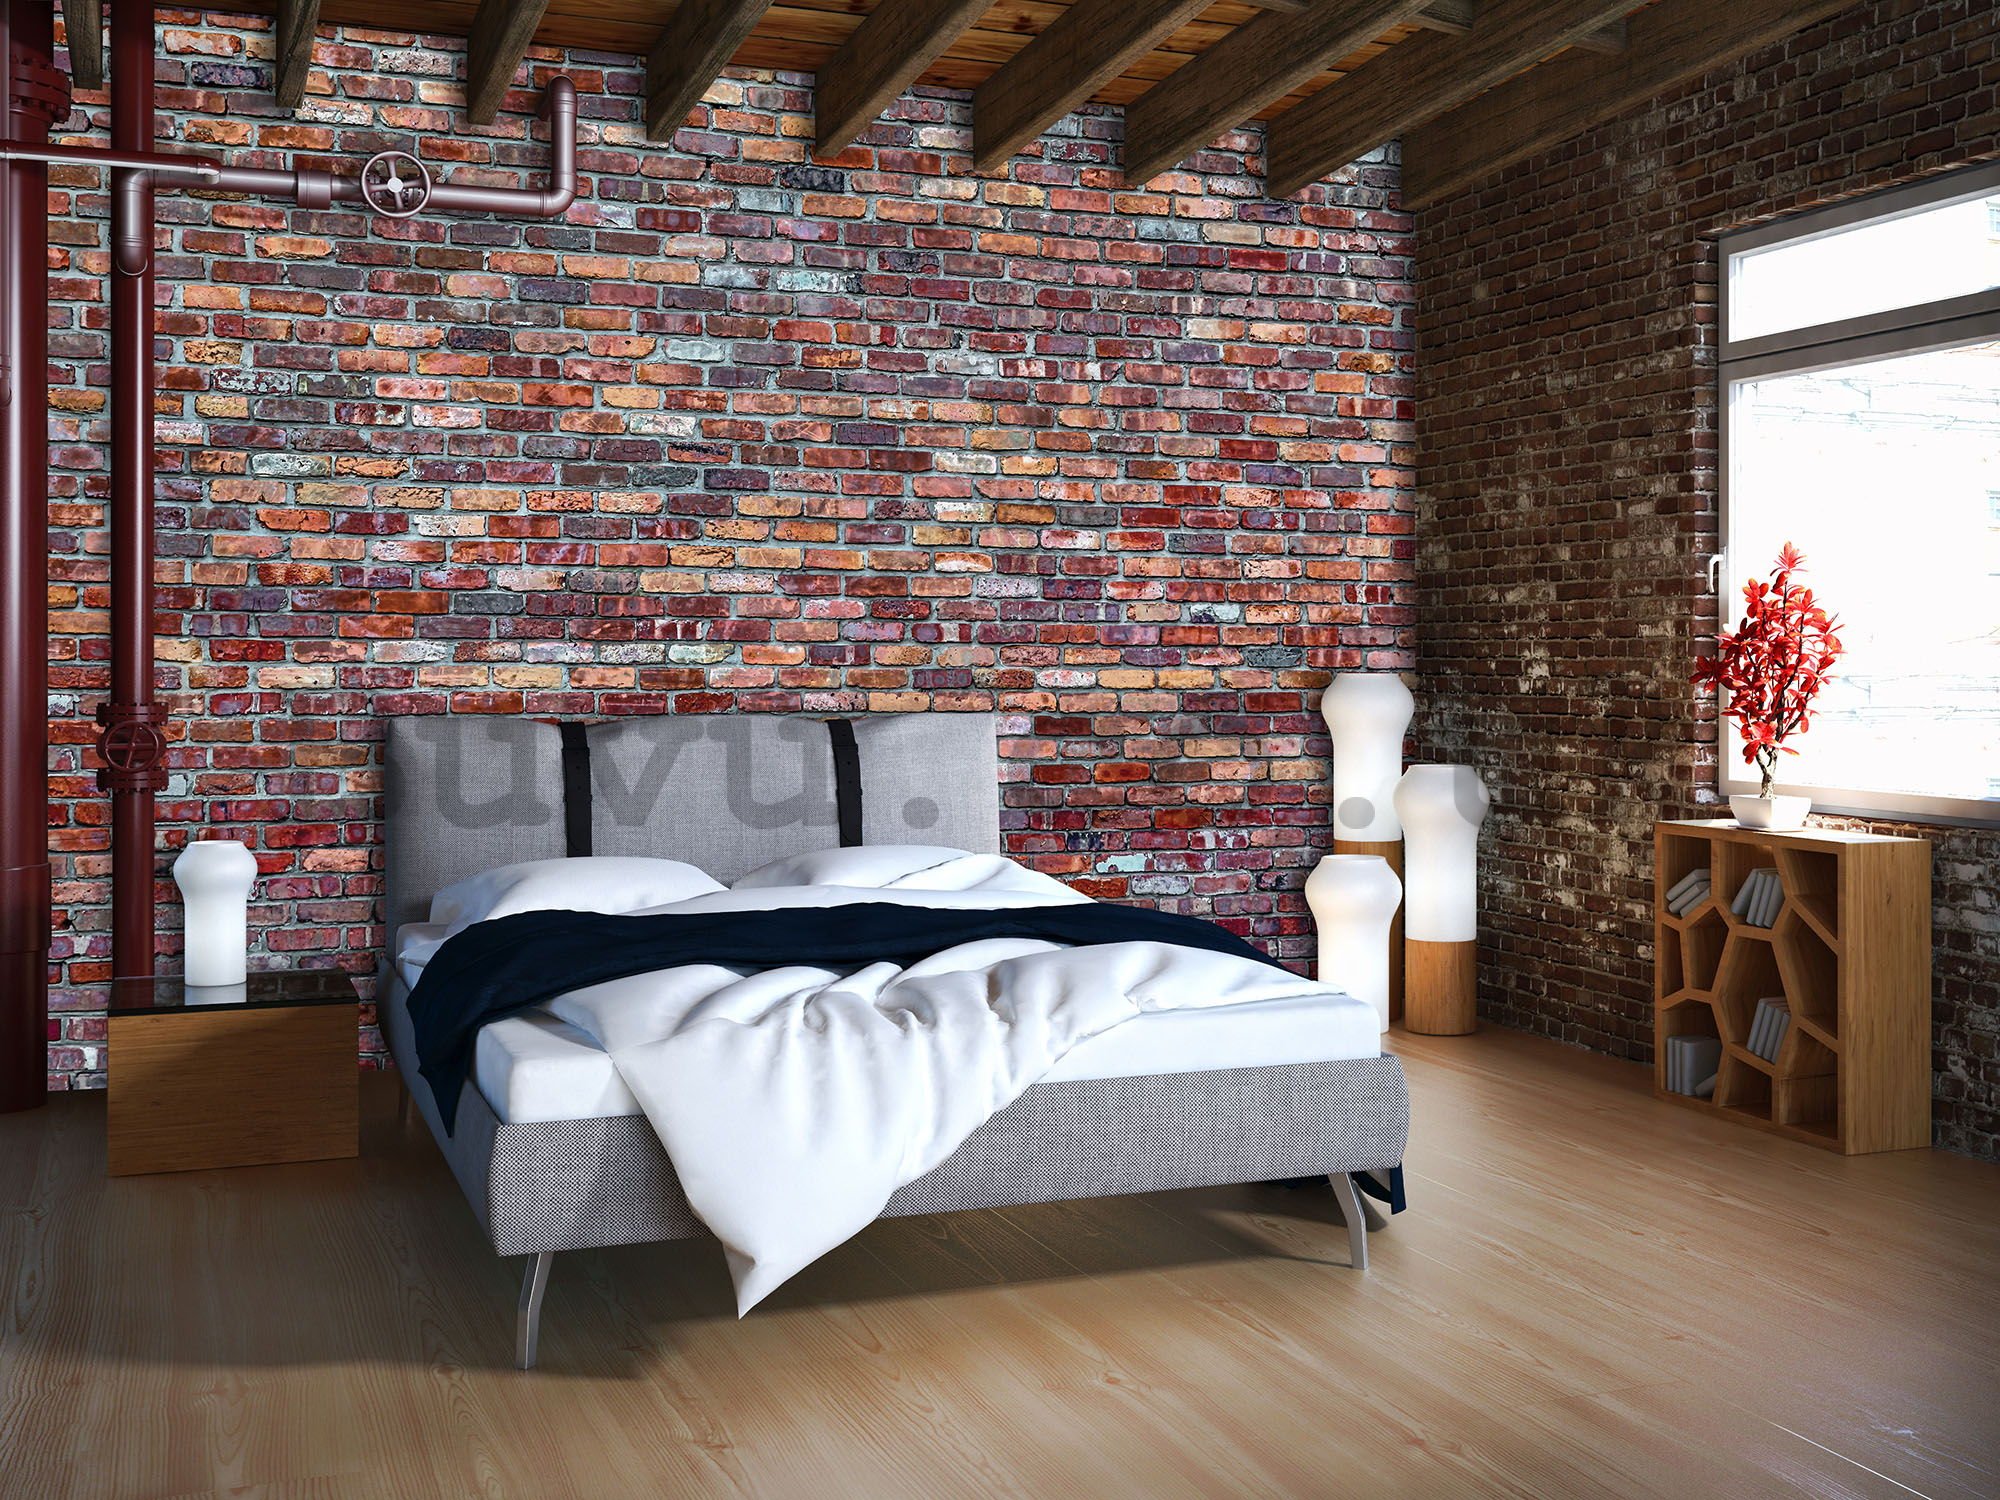 Wall mural vlies: Brick wall (4) - 184x254 cm